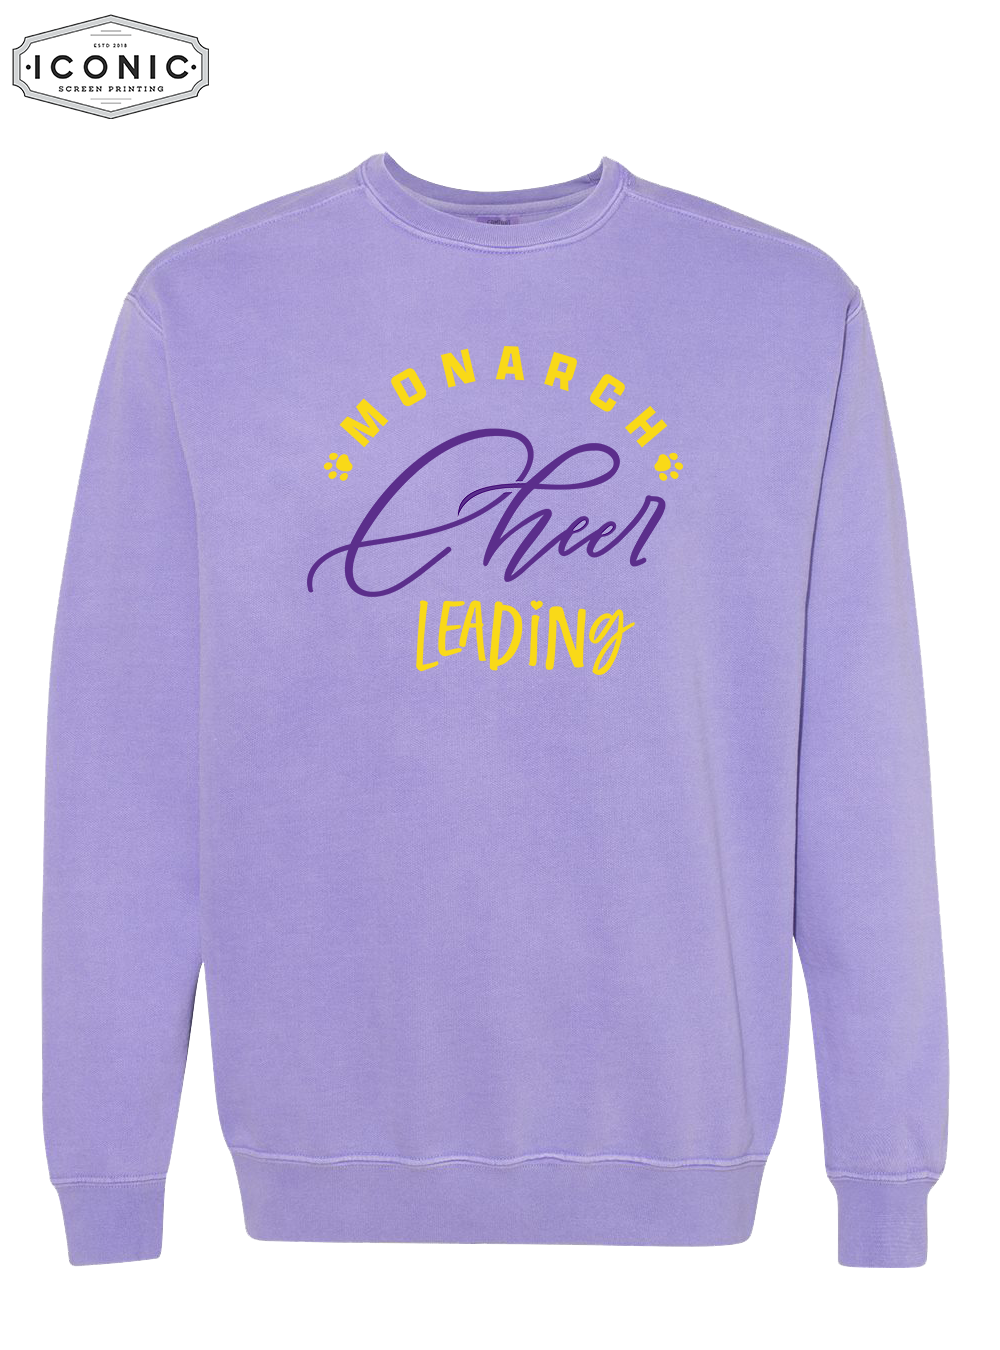 Monarch Cheer Leading - Comfort Colors Garment Dyed Sweatshirt